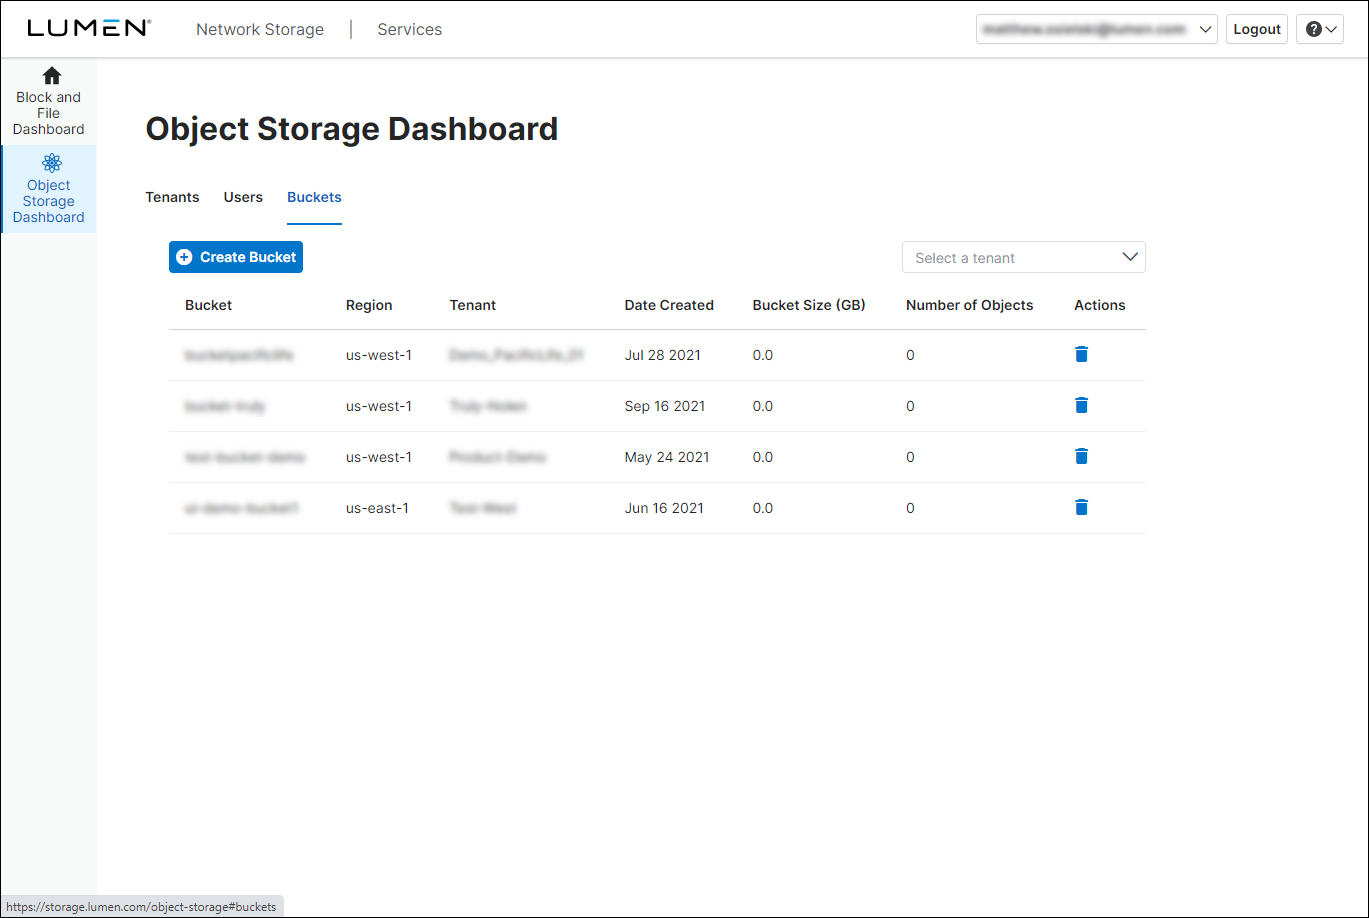 Object Storage Dashboard (showing Buckets tab)